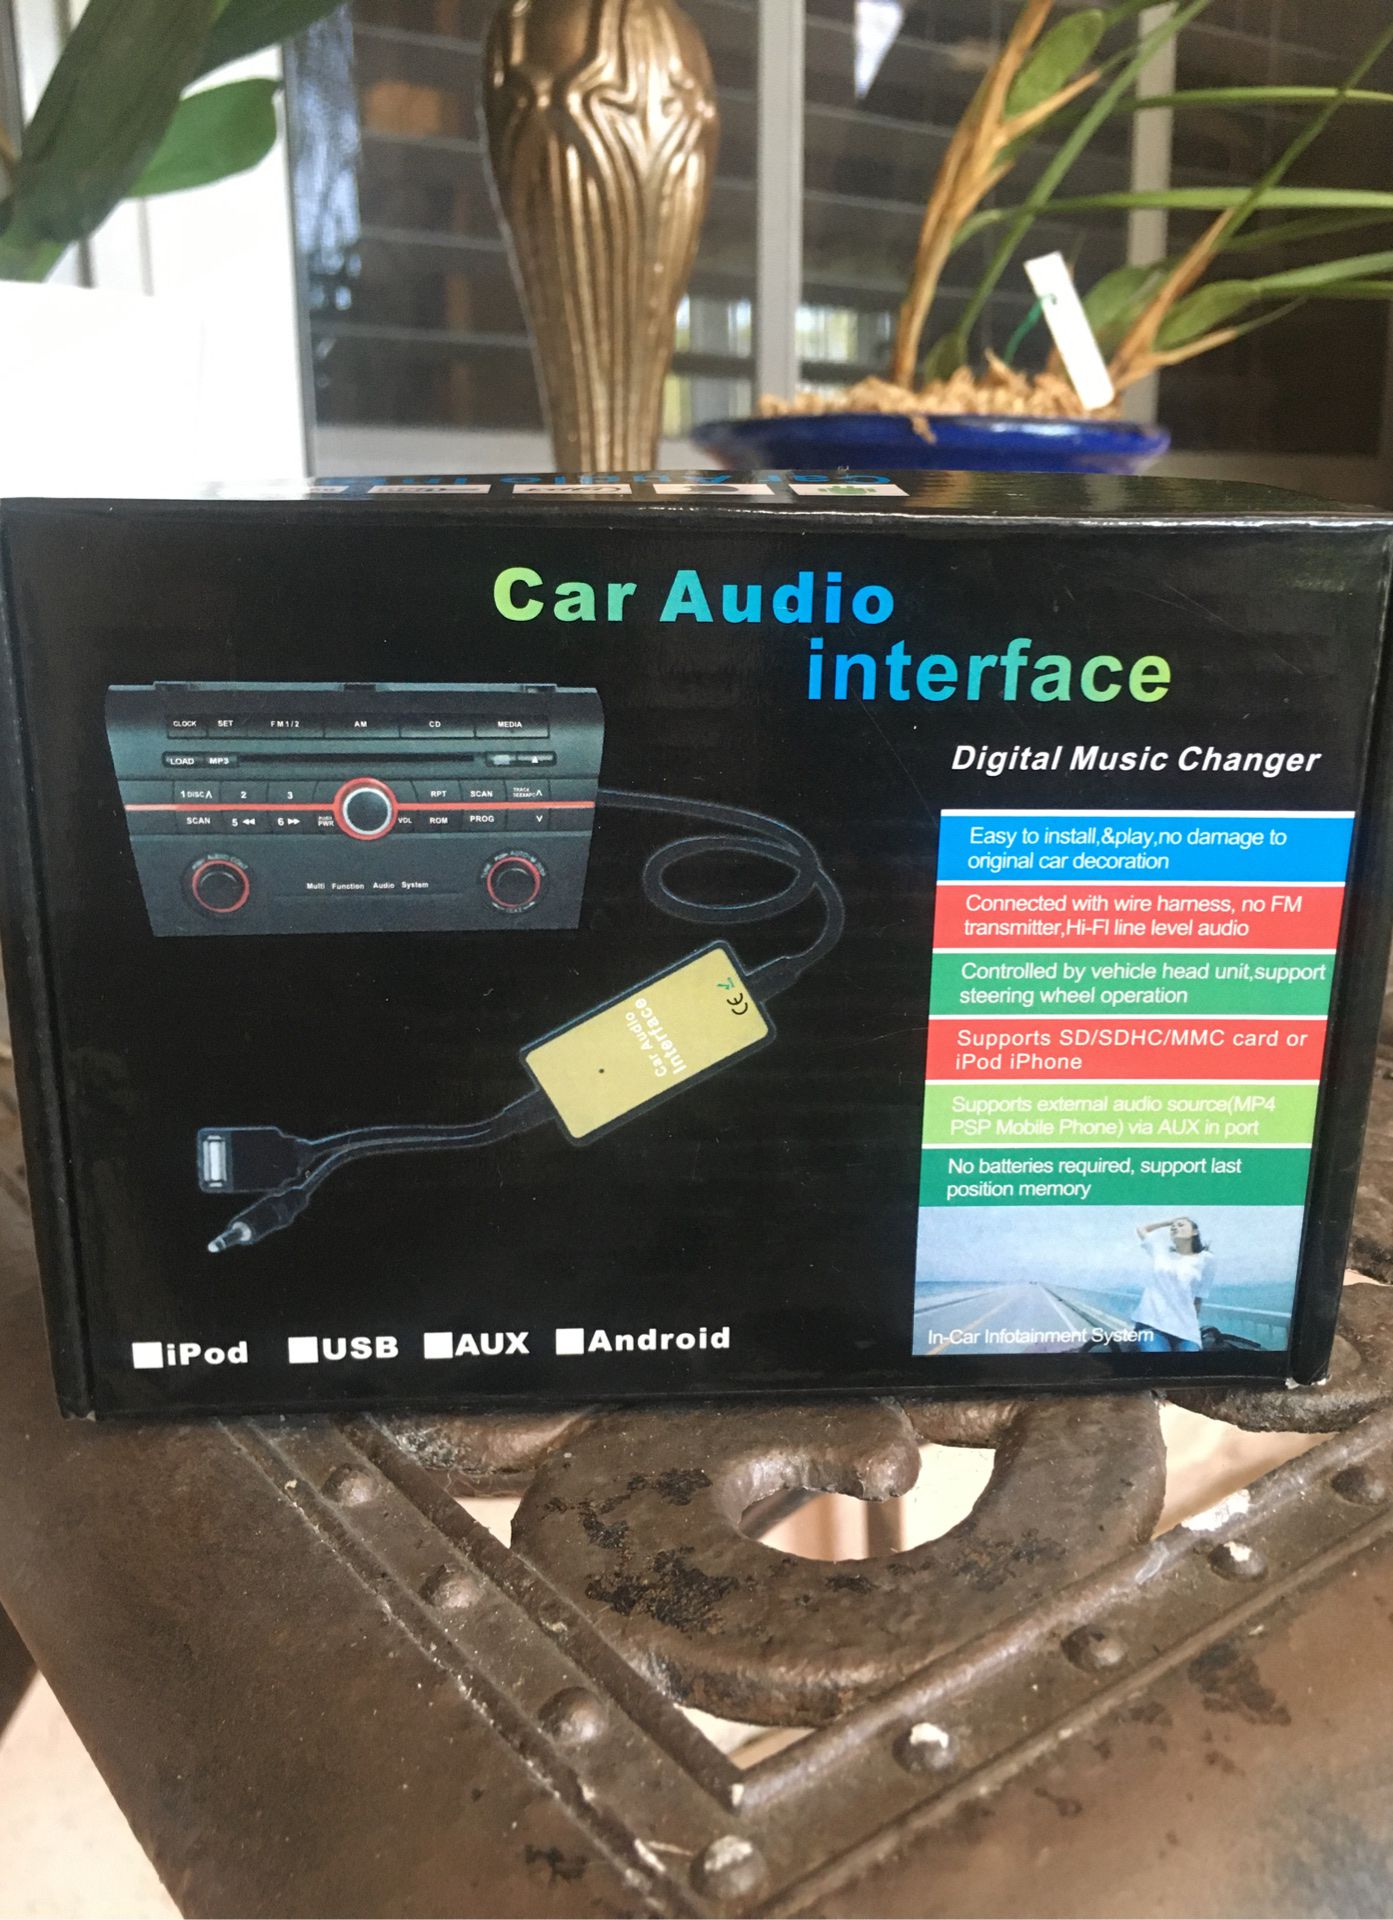 Car audio interface